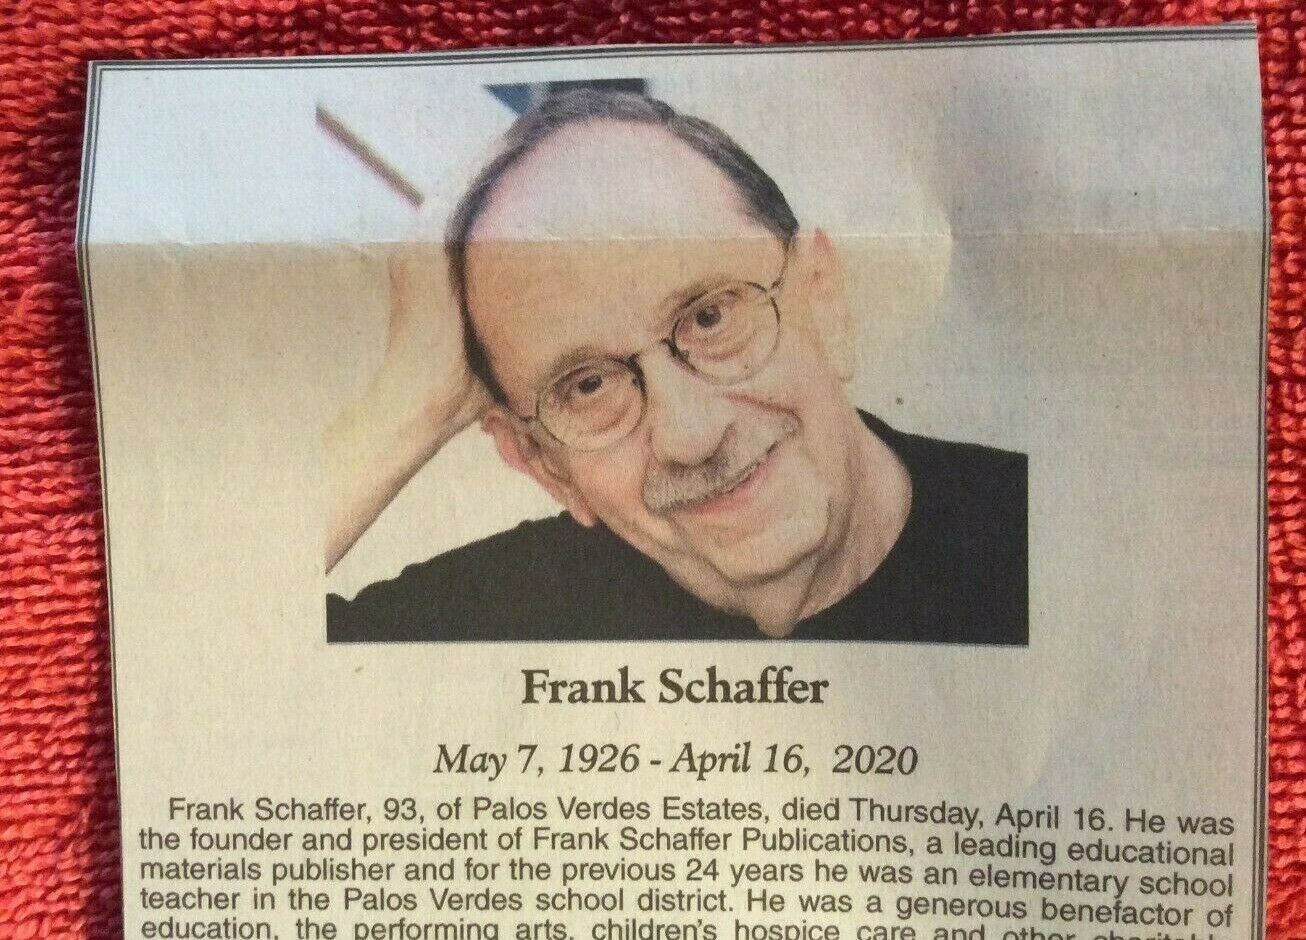 Obituary Frank Schaffer 1926 - 2020 Materials Publisher Educational Publications